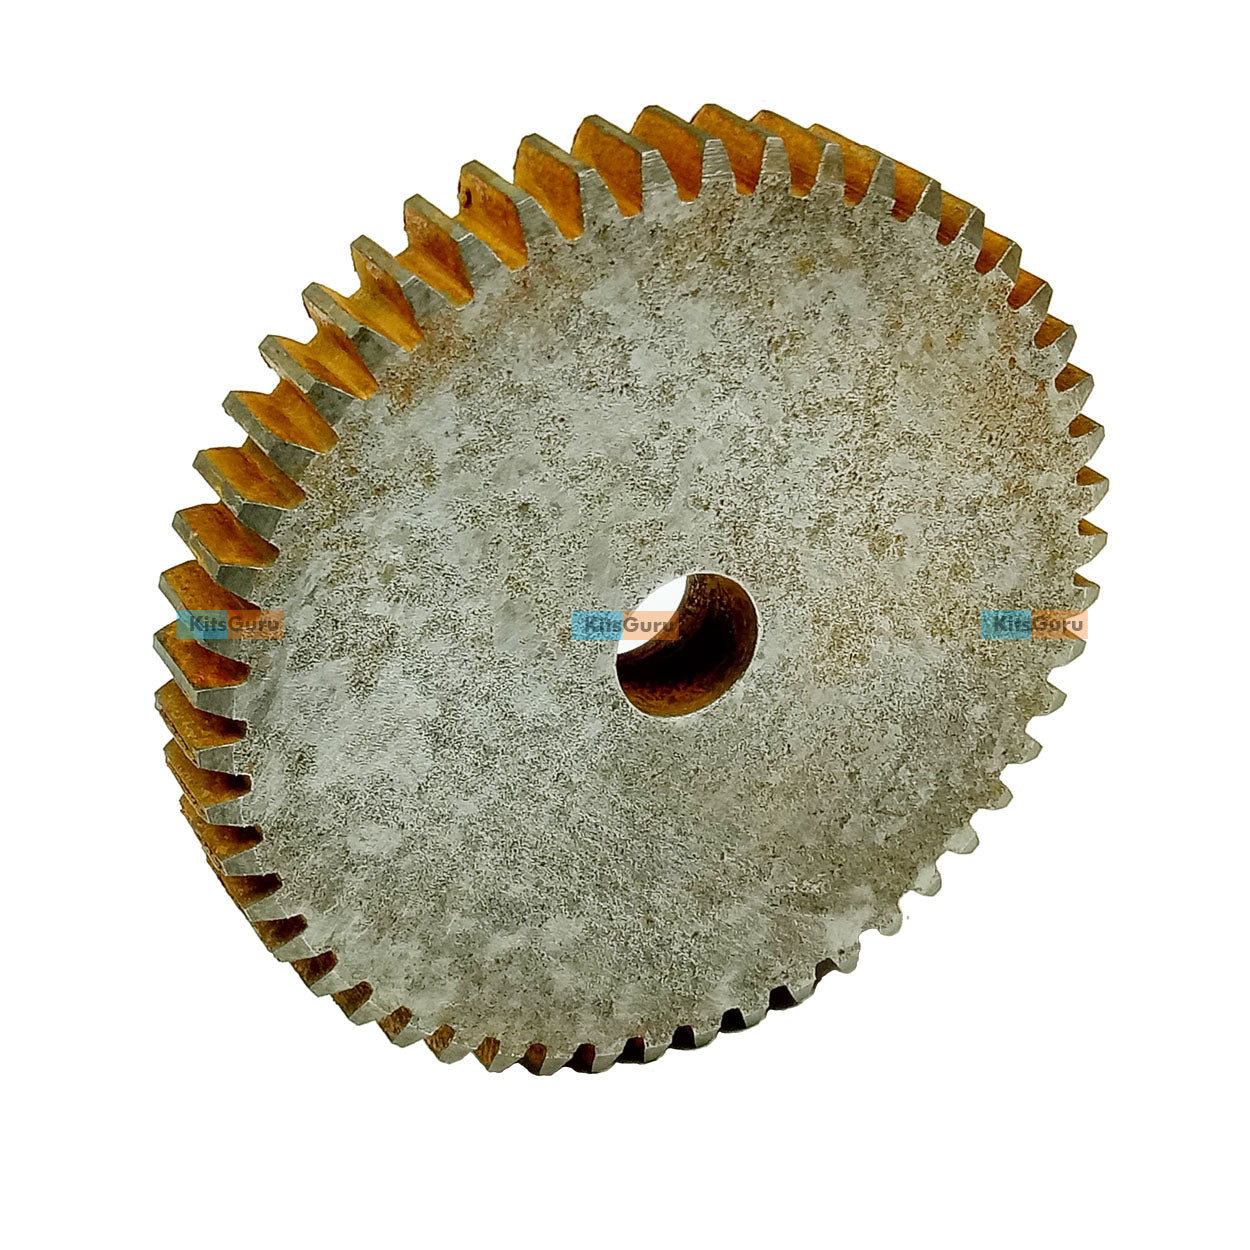 Metallic Spur/ Pinion Gear Large - 50 Teeth - 65mm Dia - 10mm Face Width -  10mm Centre Hole Dia